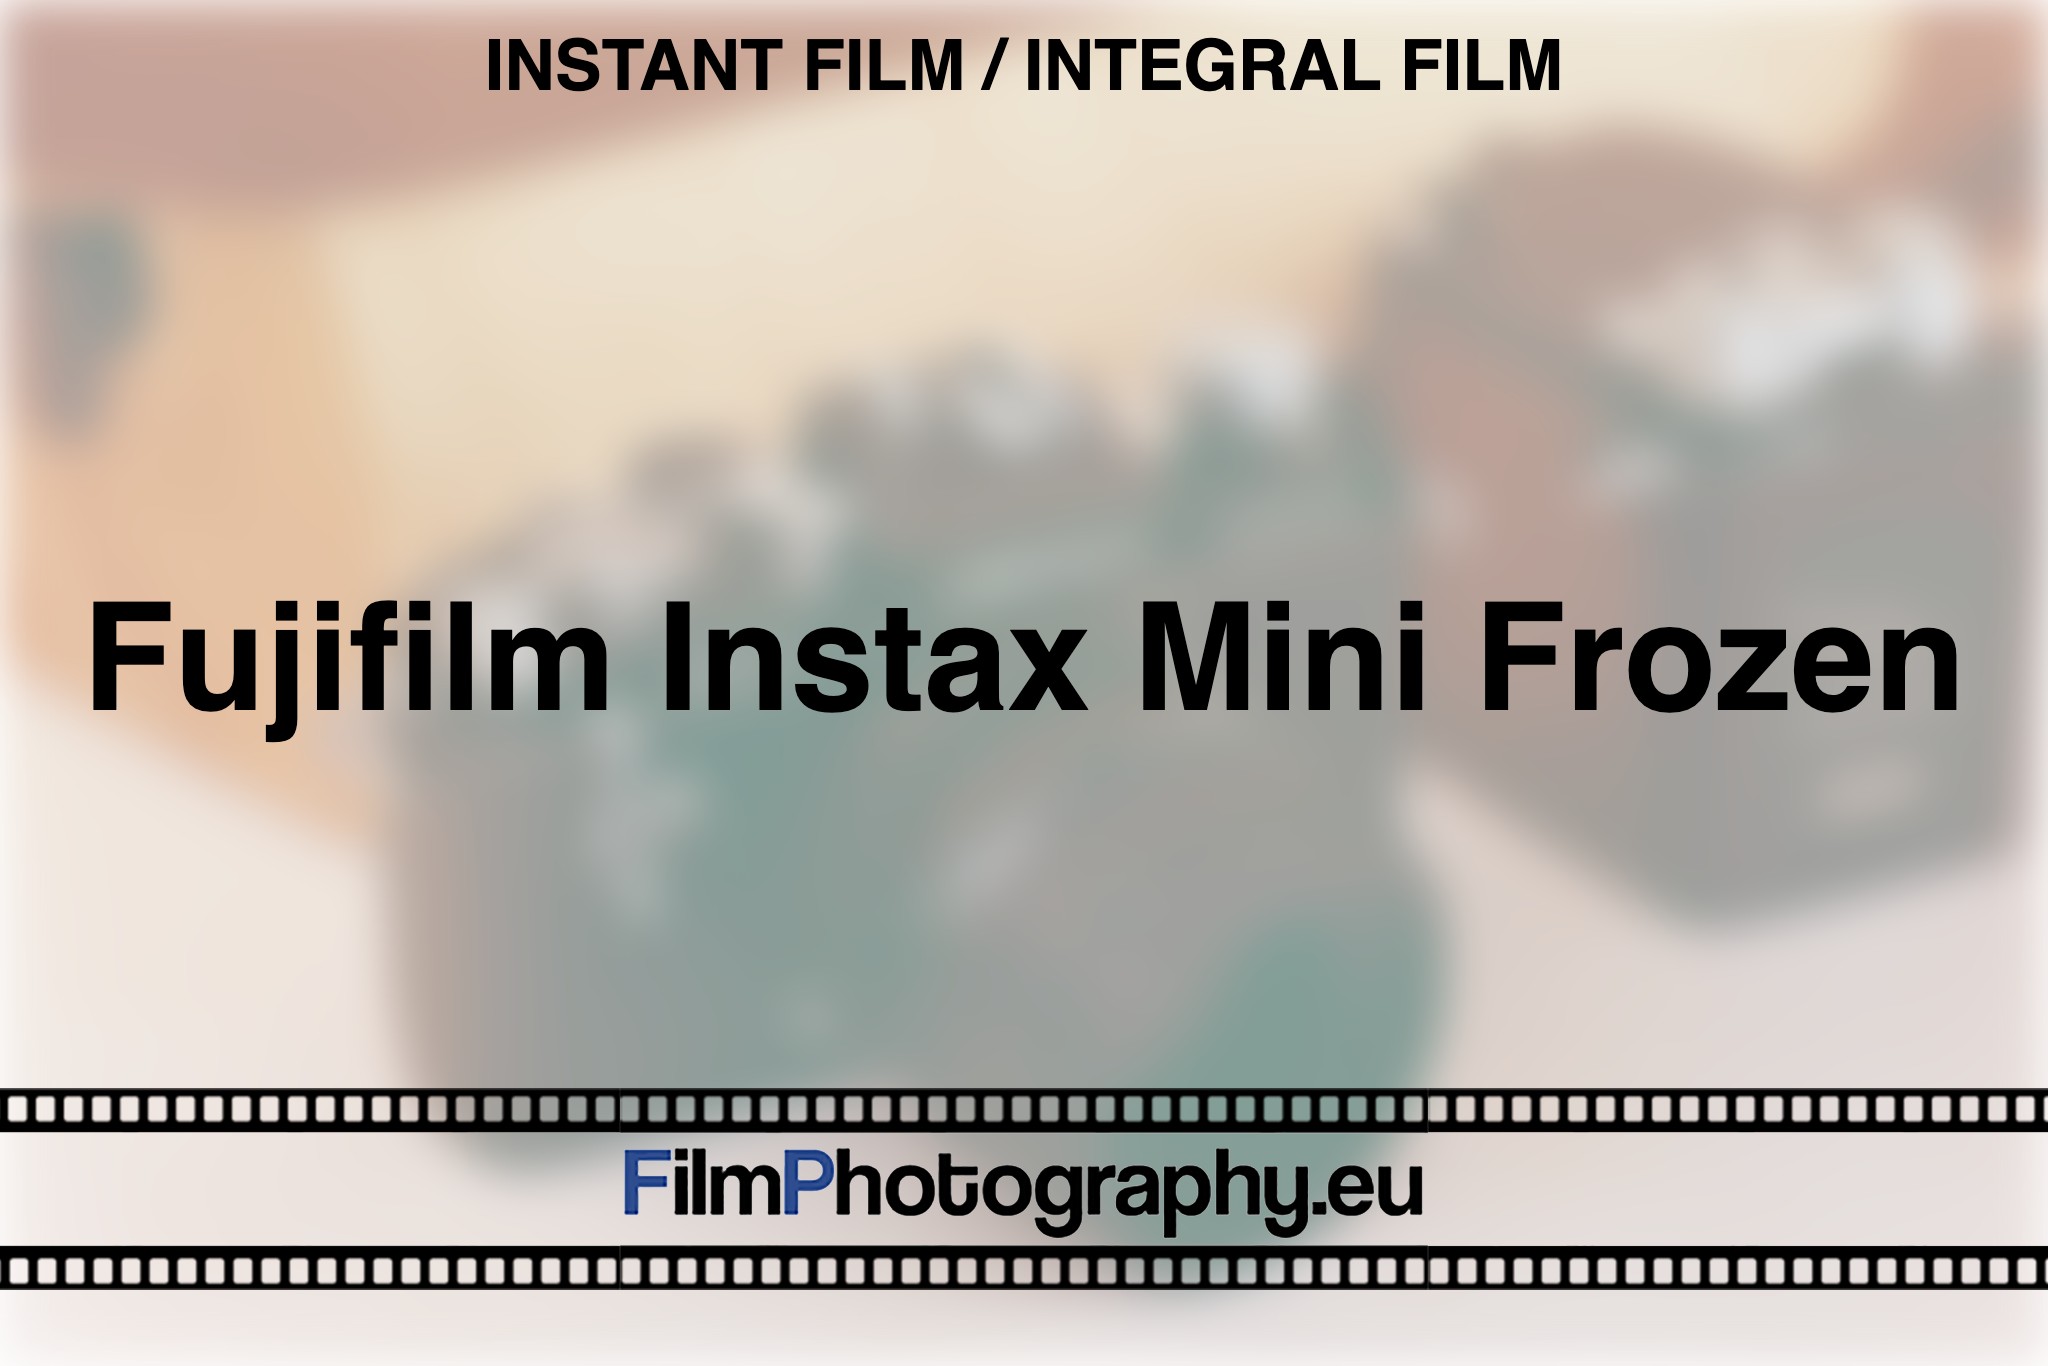 fujifilm-instax-mini-frozen-instant-film-integral-film-bnv